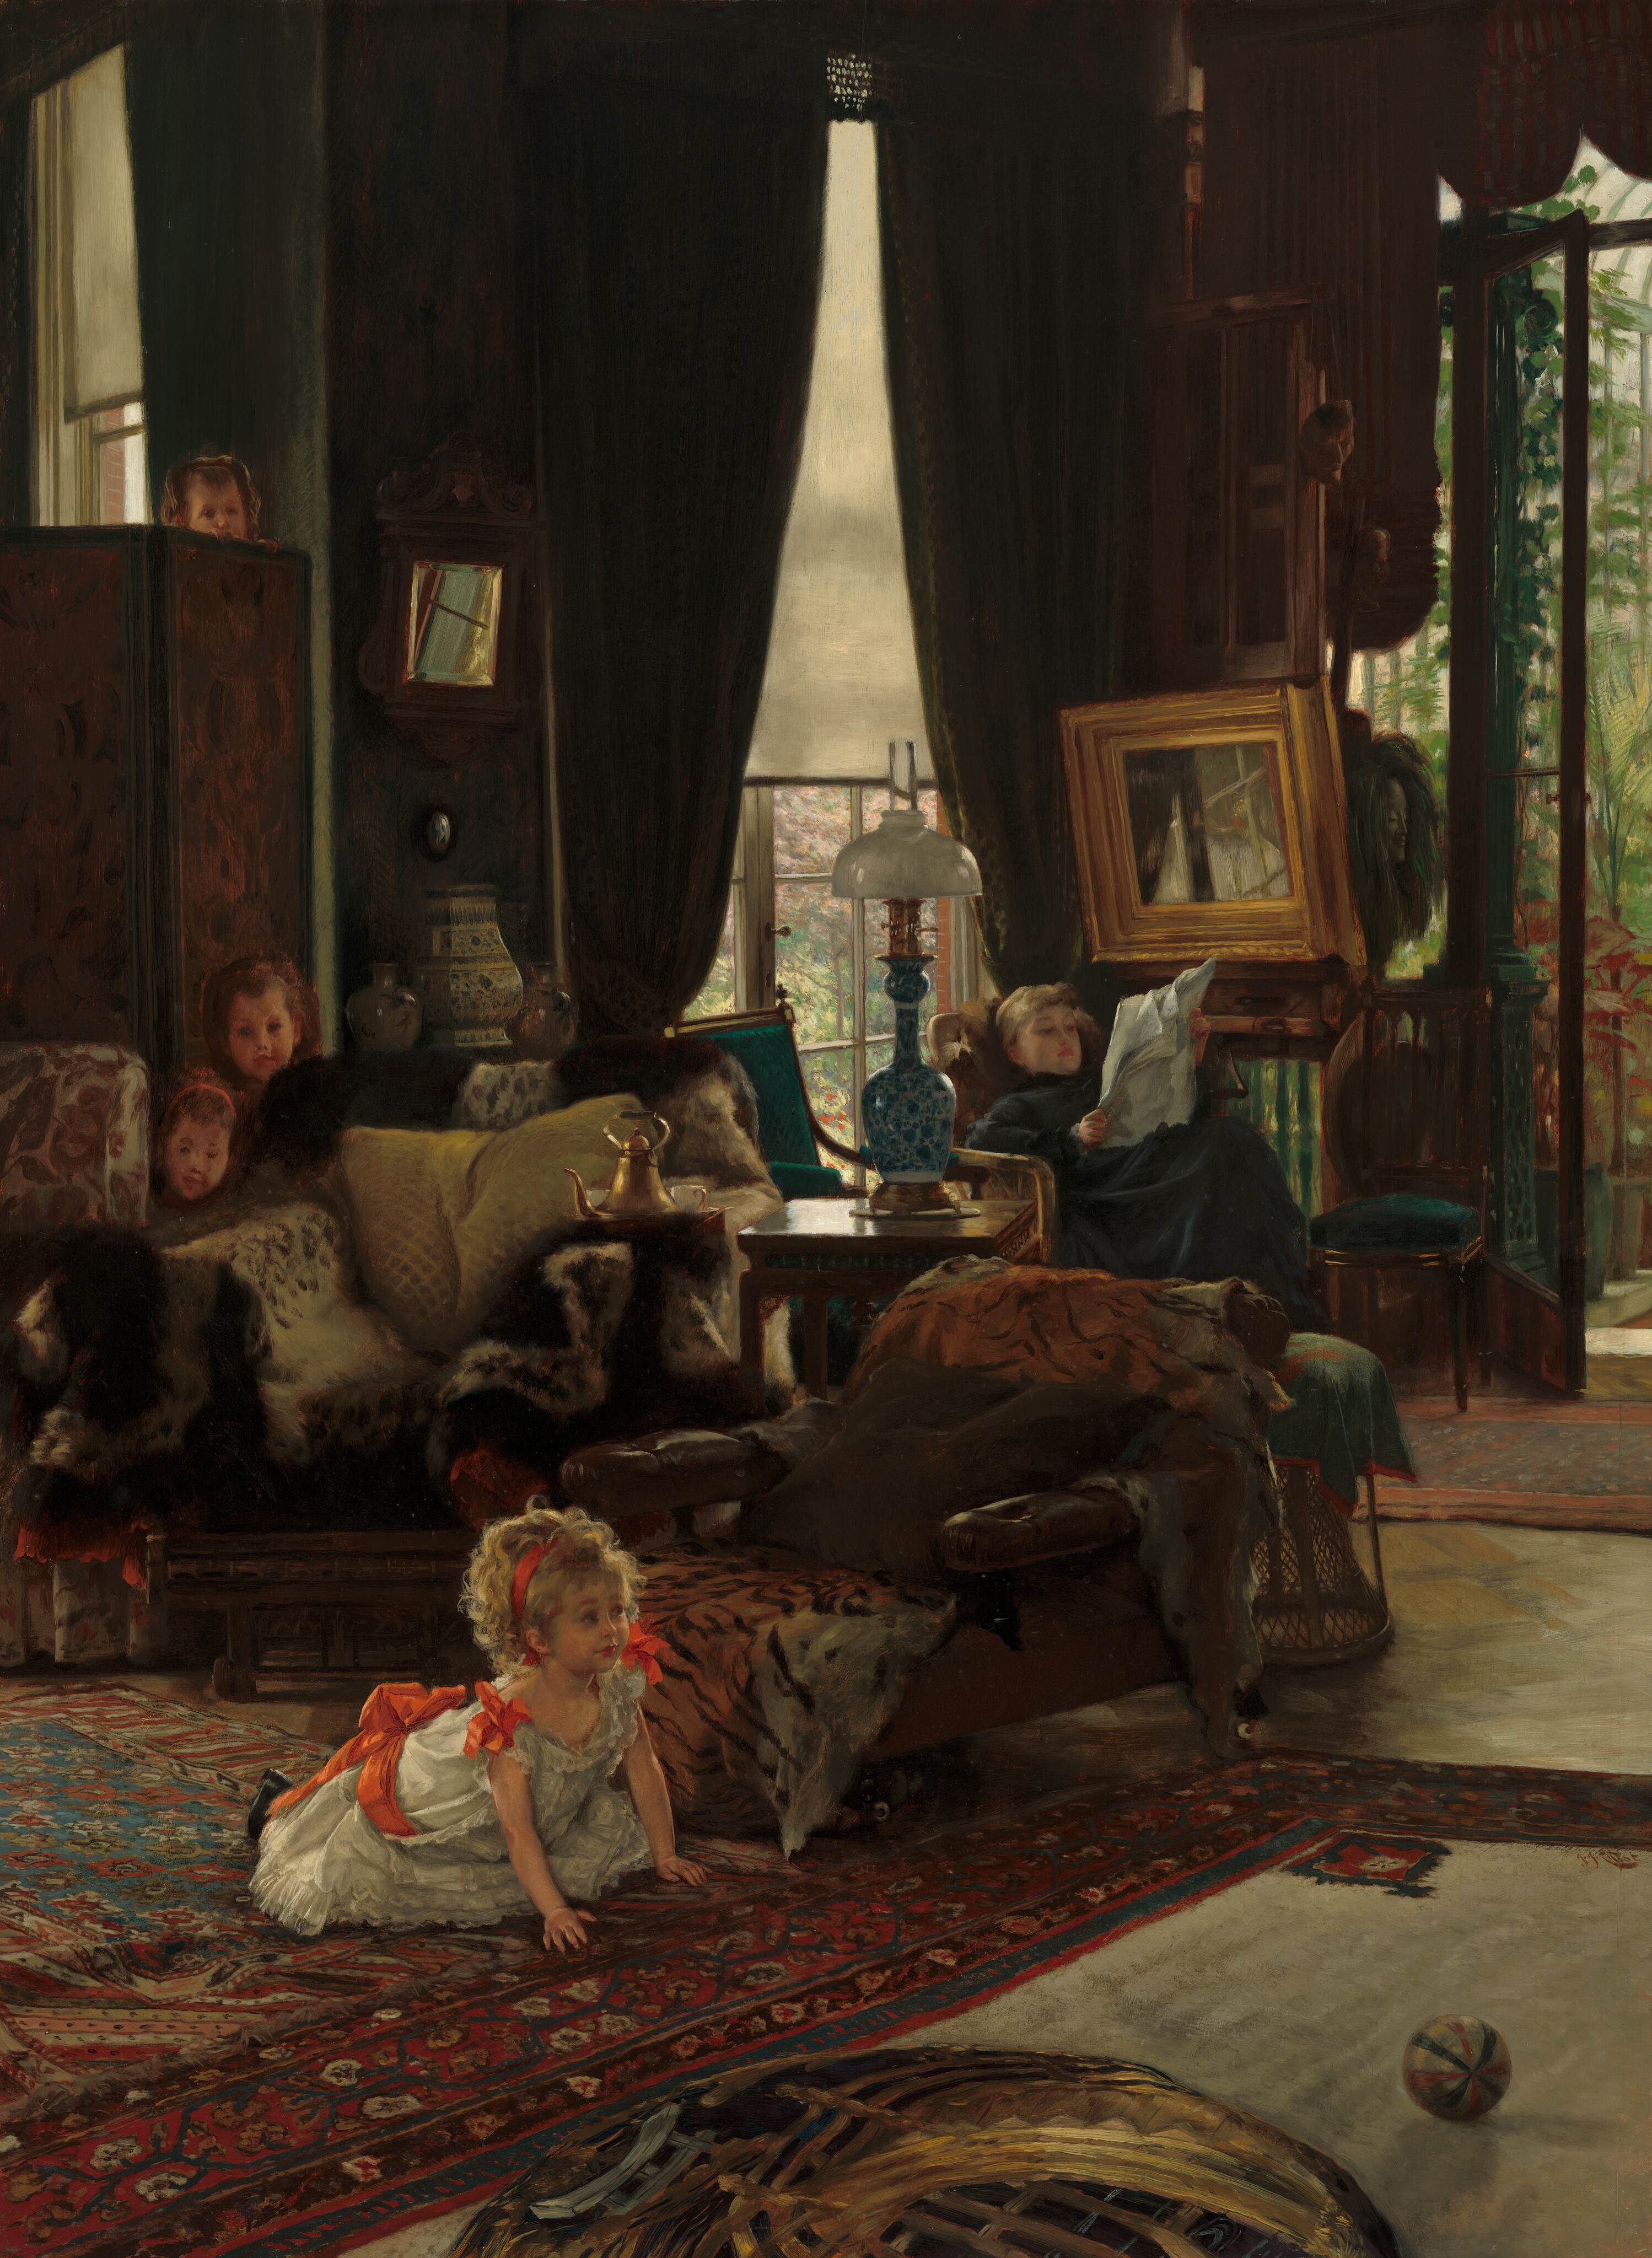 Al escondite by James Tissot - c. 1877 - 73,4 x 53,9 cm National Gallery of Art